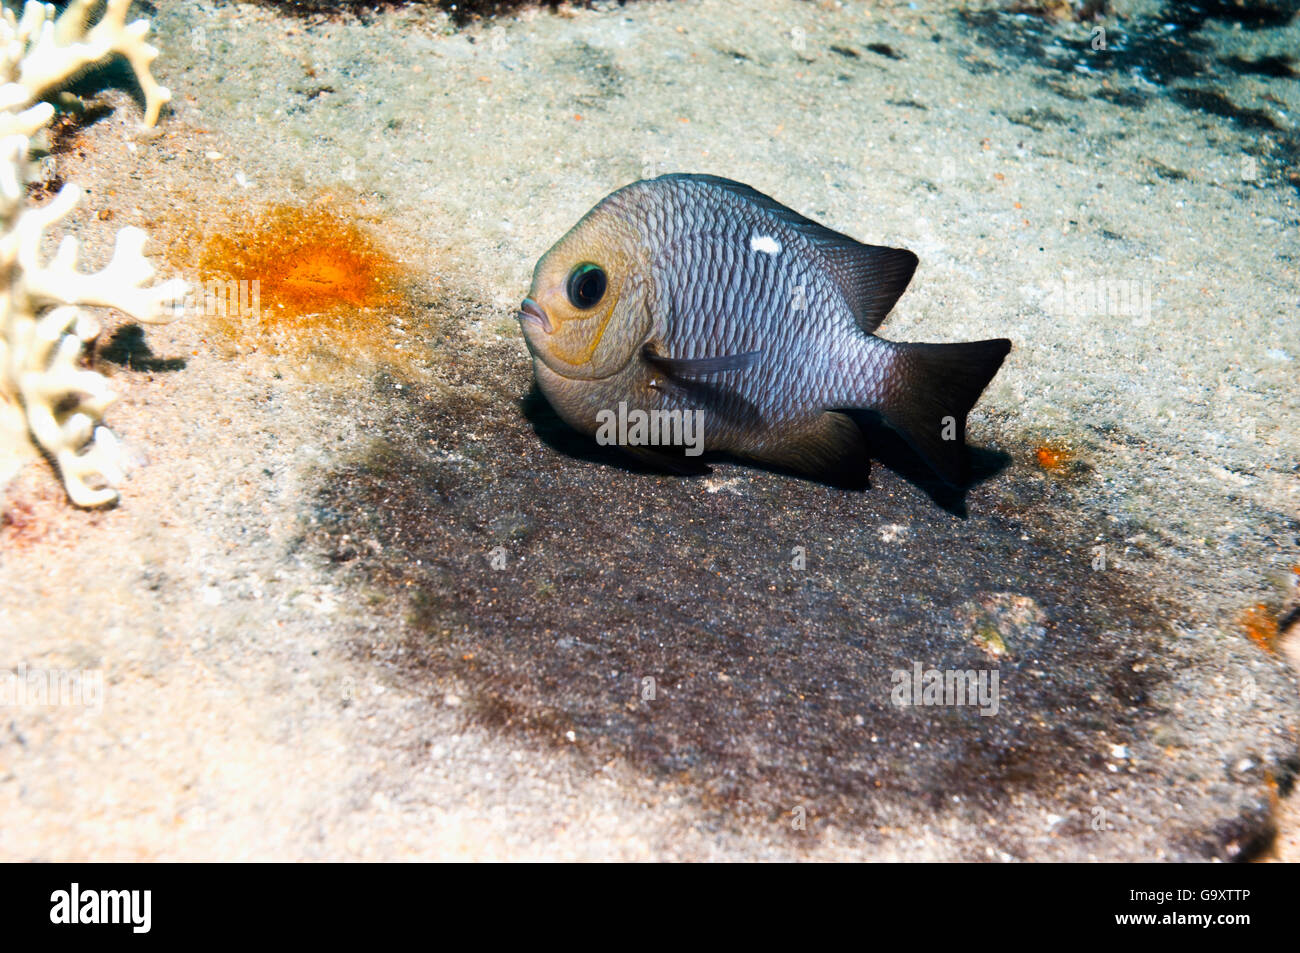 Three-spot damsel (Dascyllus trimaculatus) guarding eggs.  Egypt, Red Sea. Stock Photo